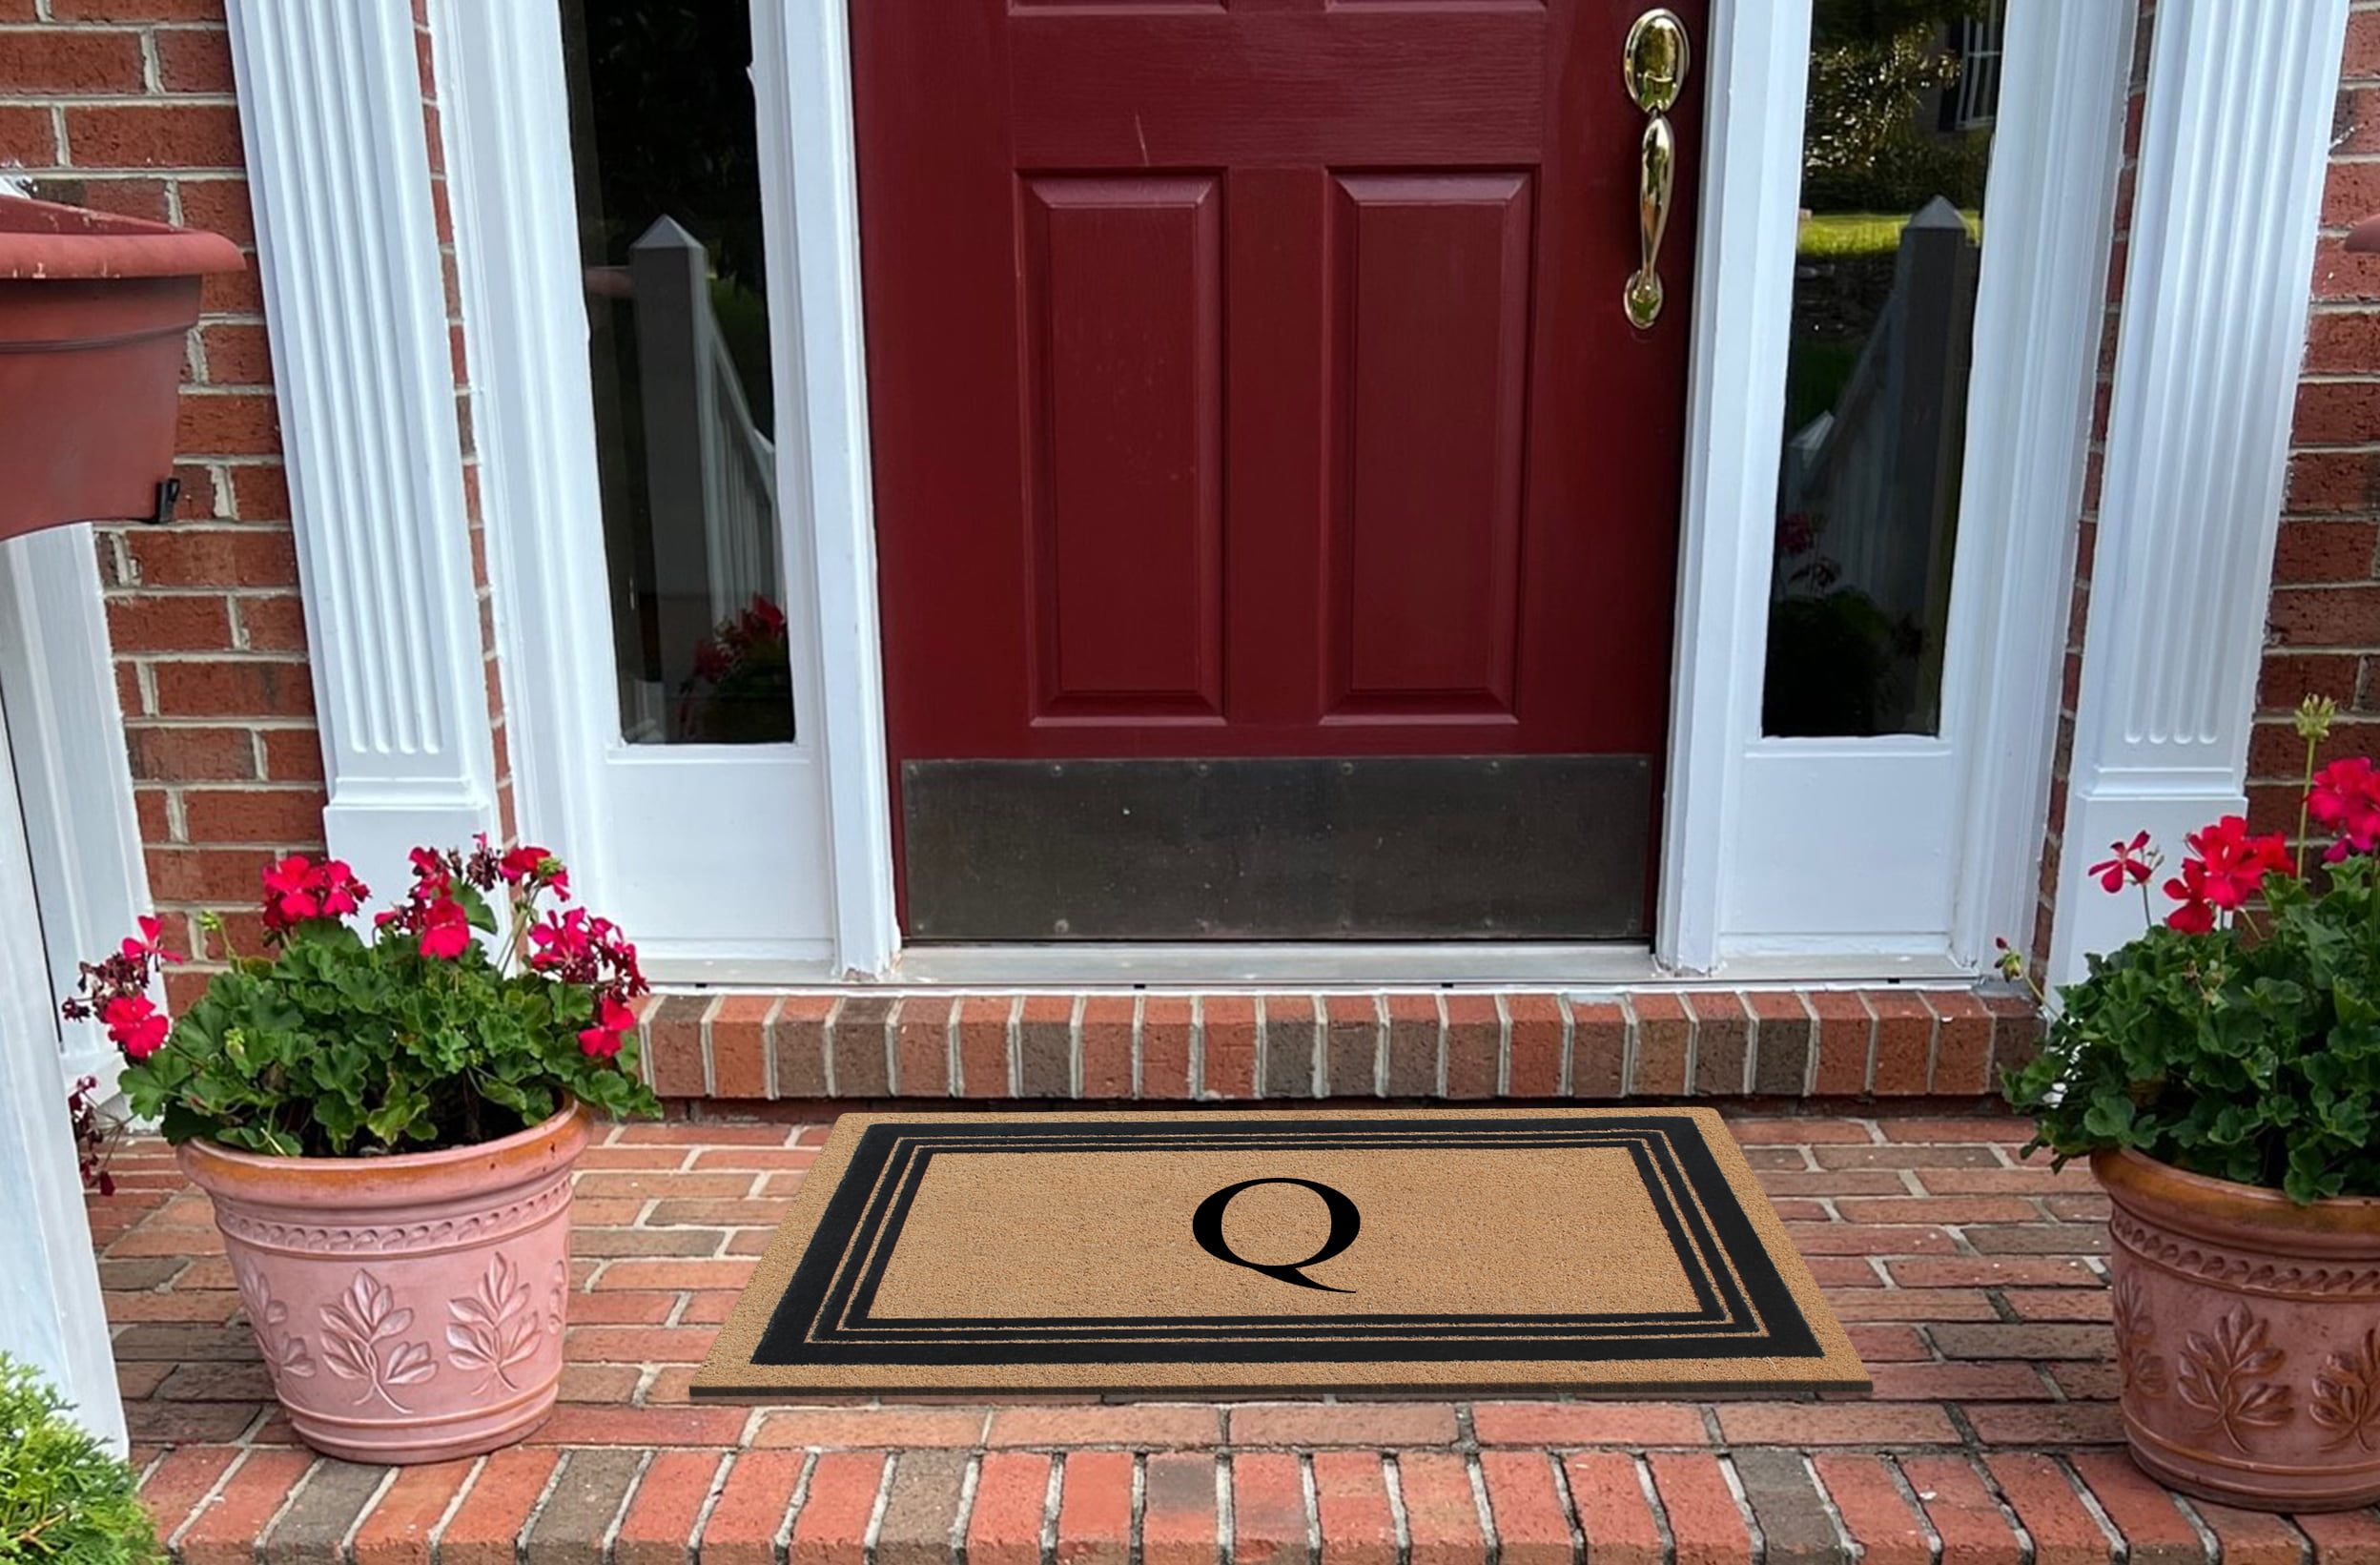 SOCOOL Front Door Mats Outdoor Indoor-Thick Non Slip Rubber Outdoor Welcome  Mat Rug Outdoor Door mats For Outside Inside Entry Home Entrance - 32x47  Burgundy Flower 